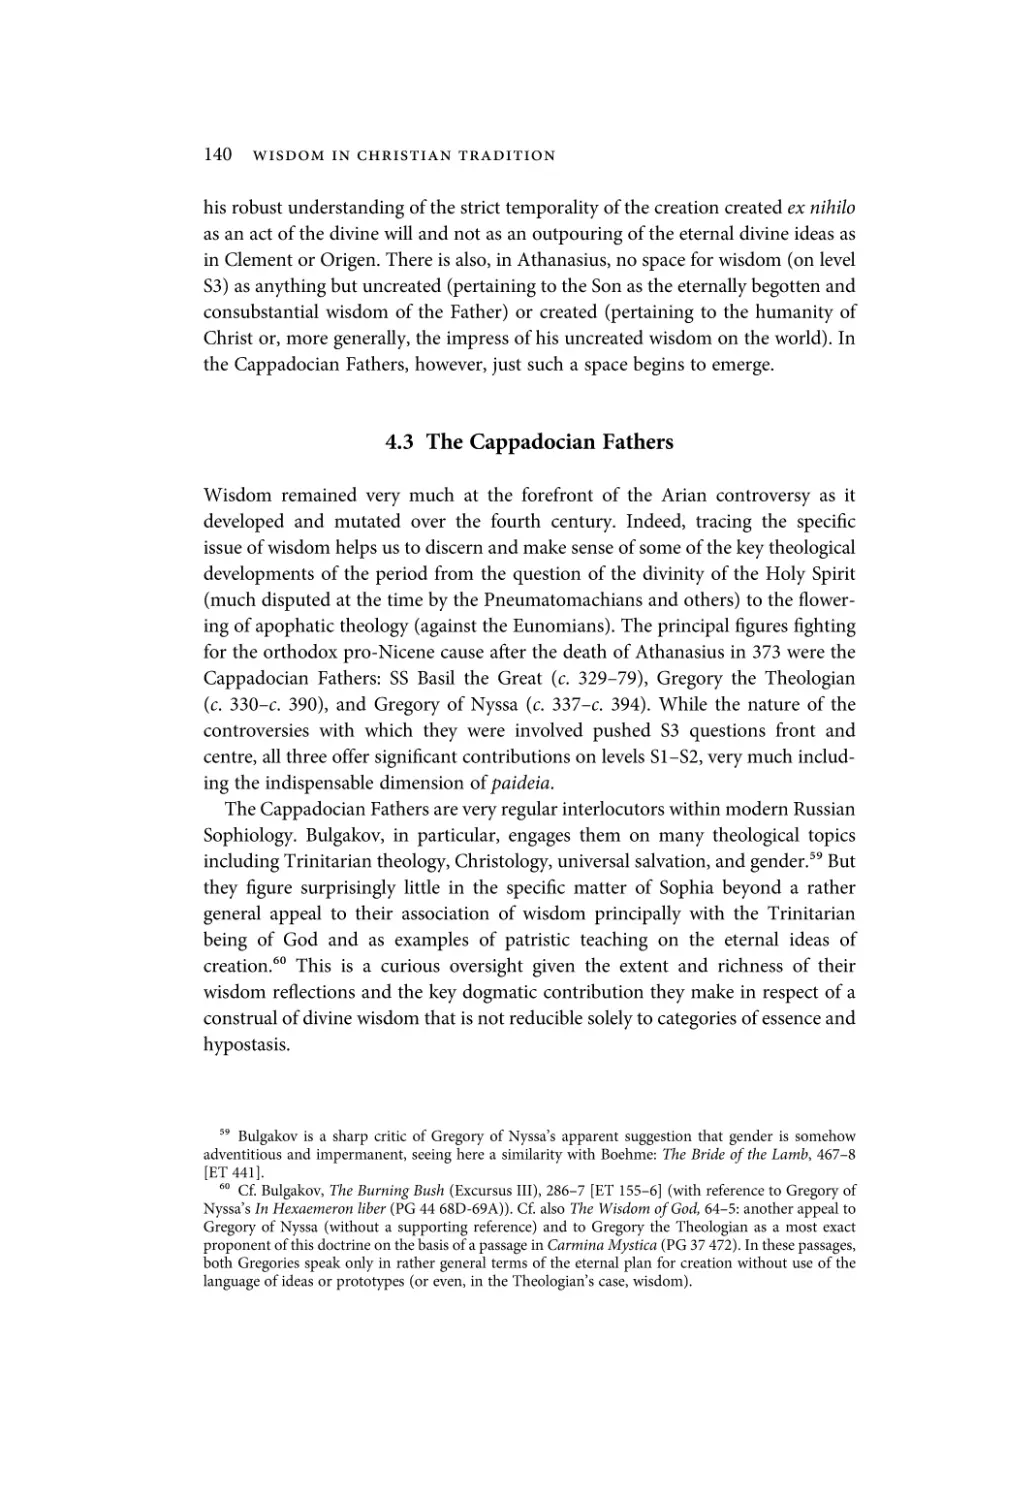 4.3 The Cappadocian Fathers